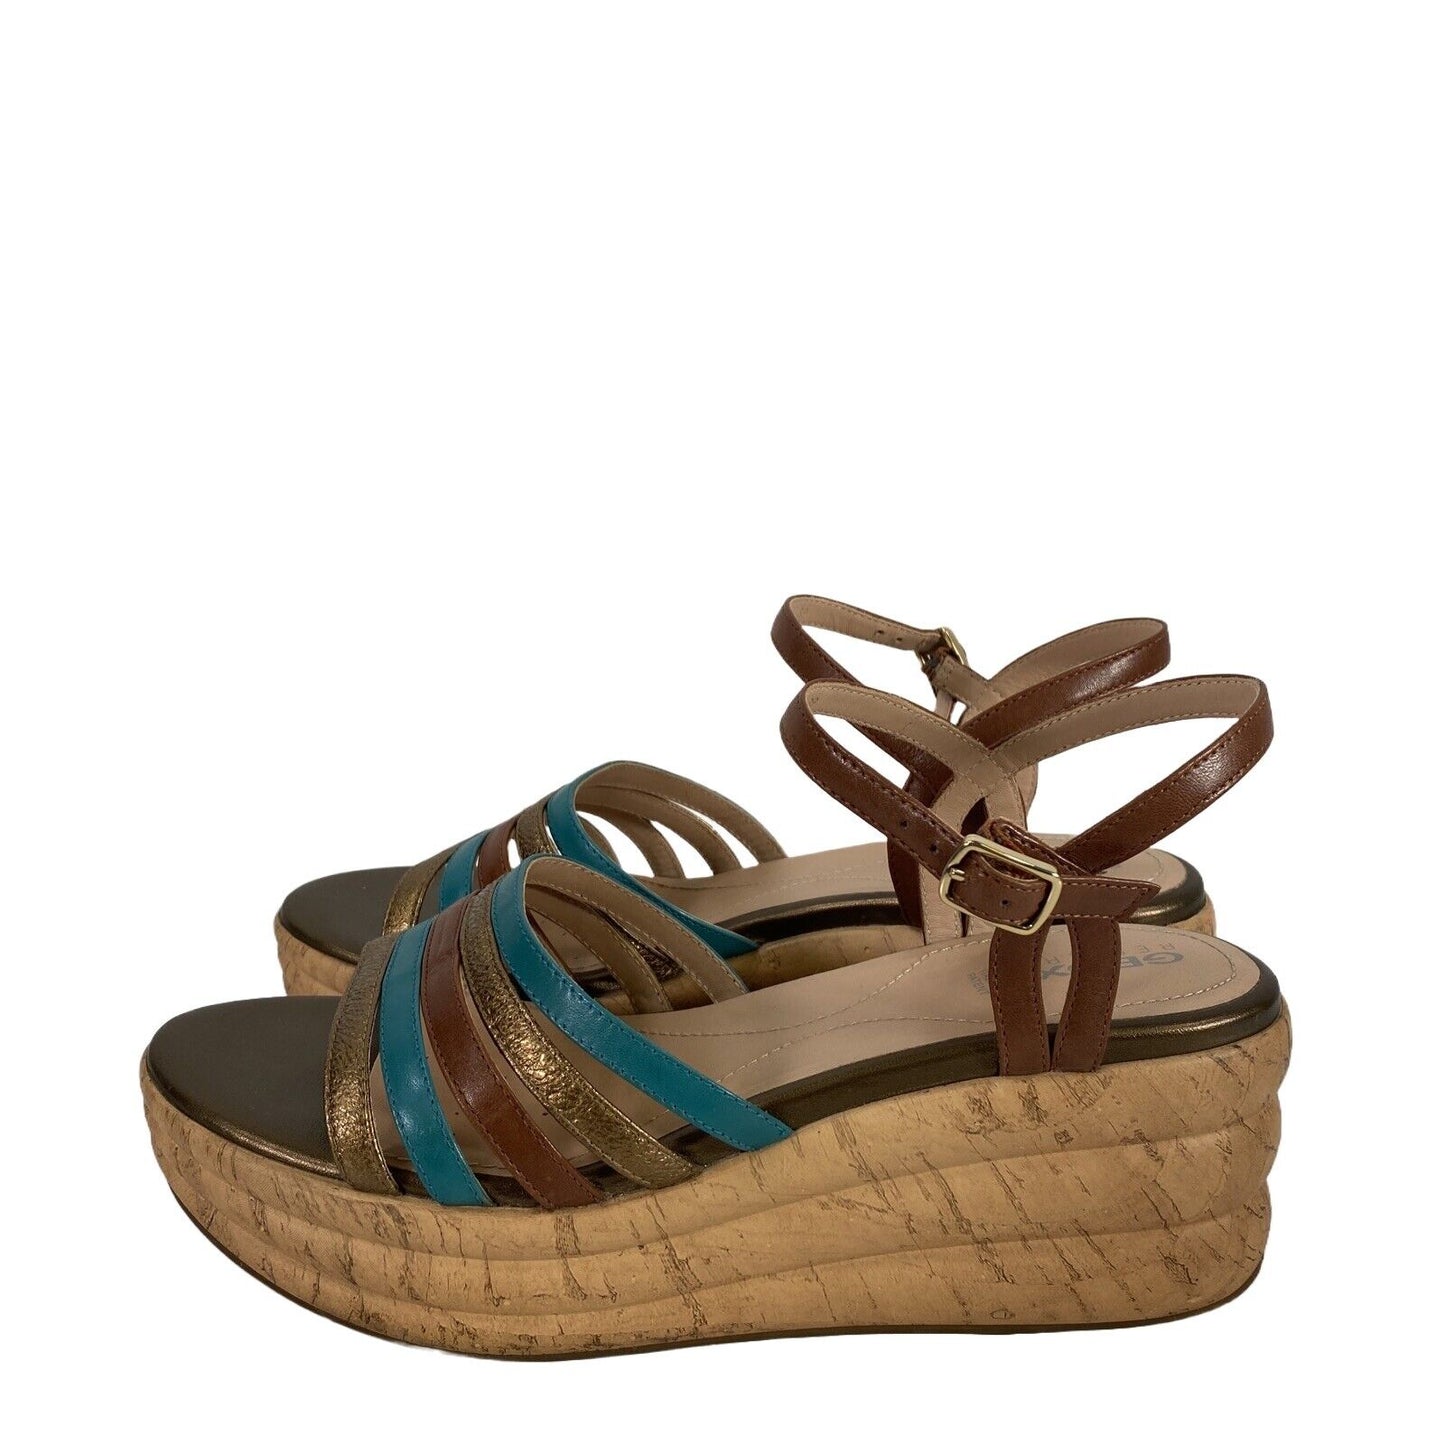 Geox Respira Women's Brown/Blue Primulao Platform Sandals - 39 (US 9)